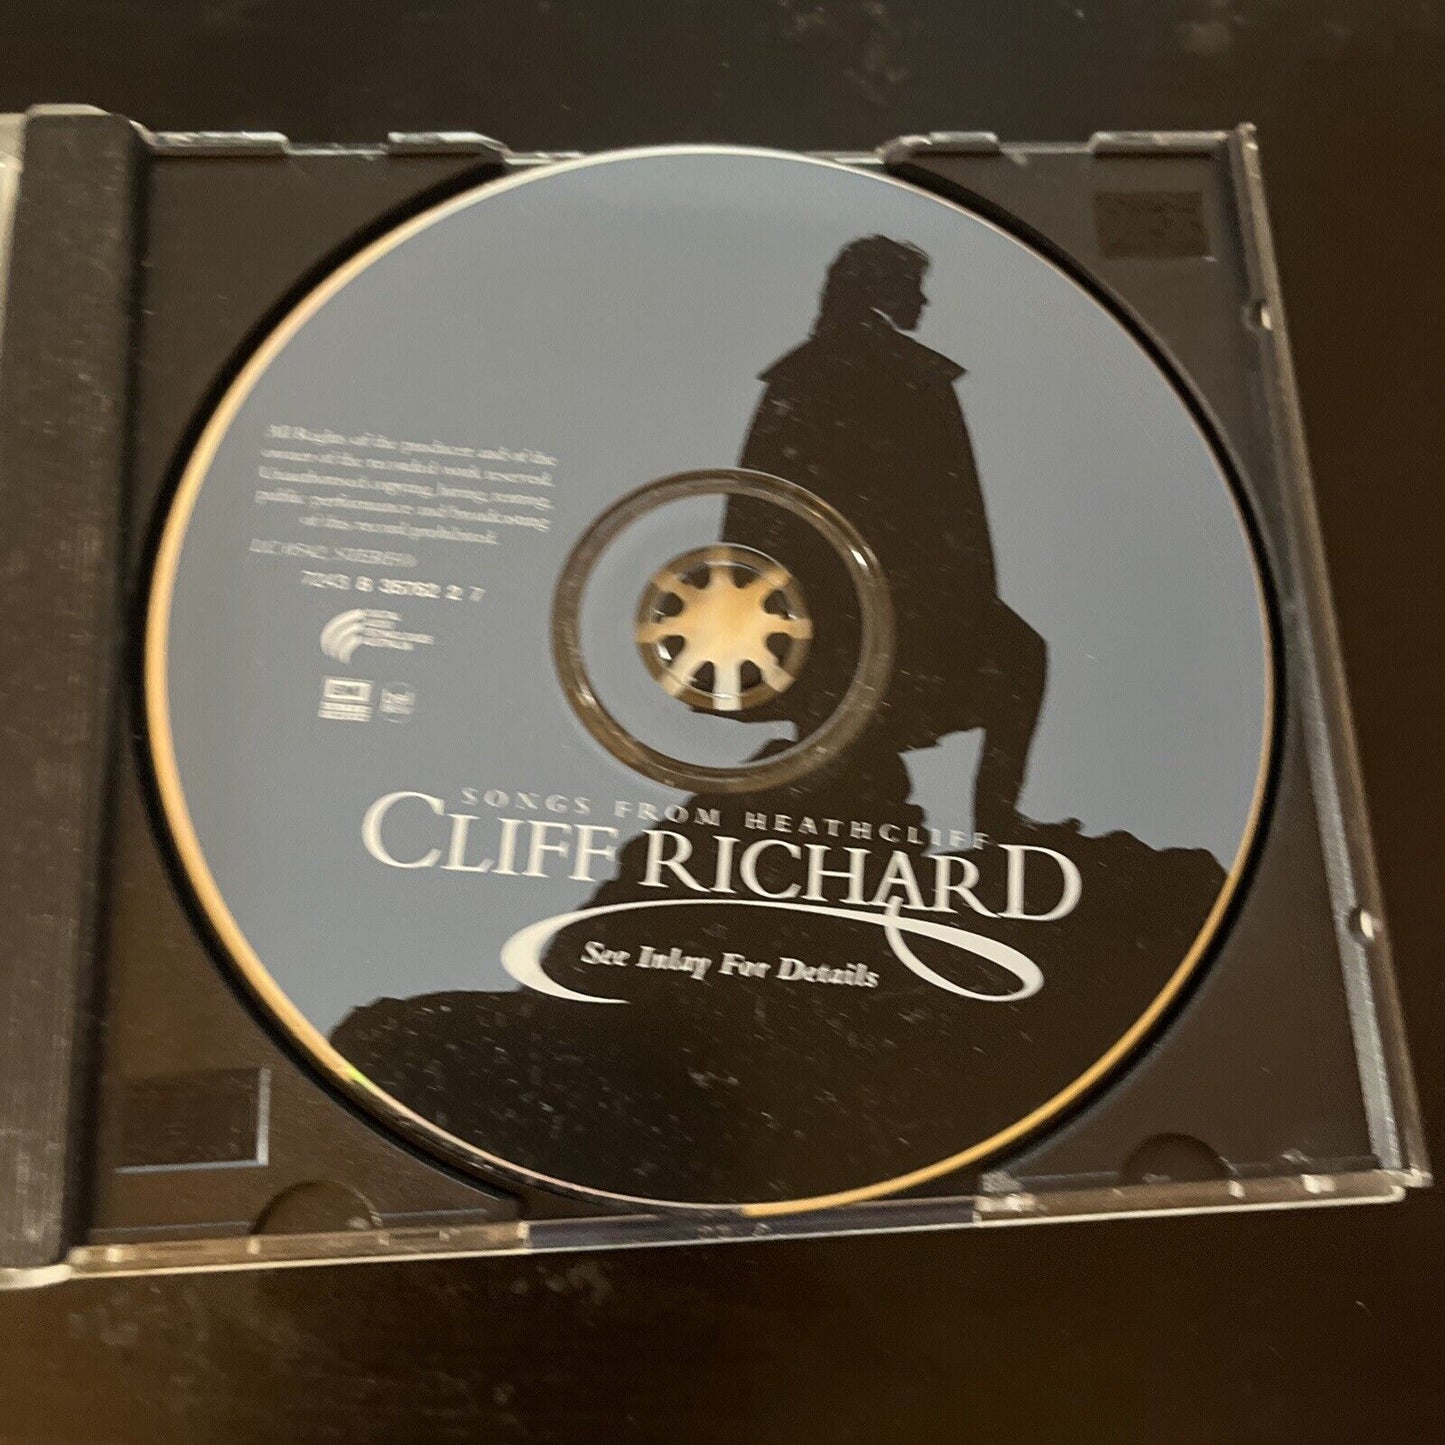 Cliff Richard - Songs from Heathcliff (CD, 1995)